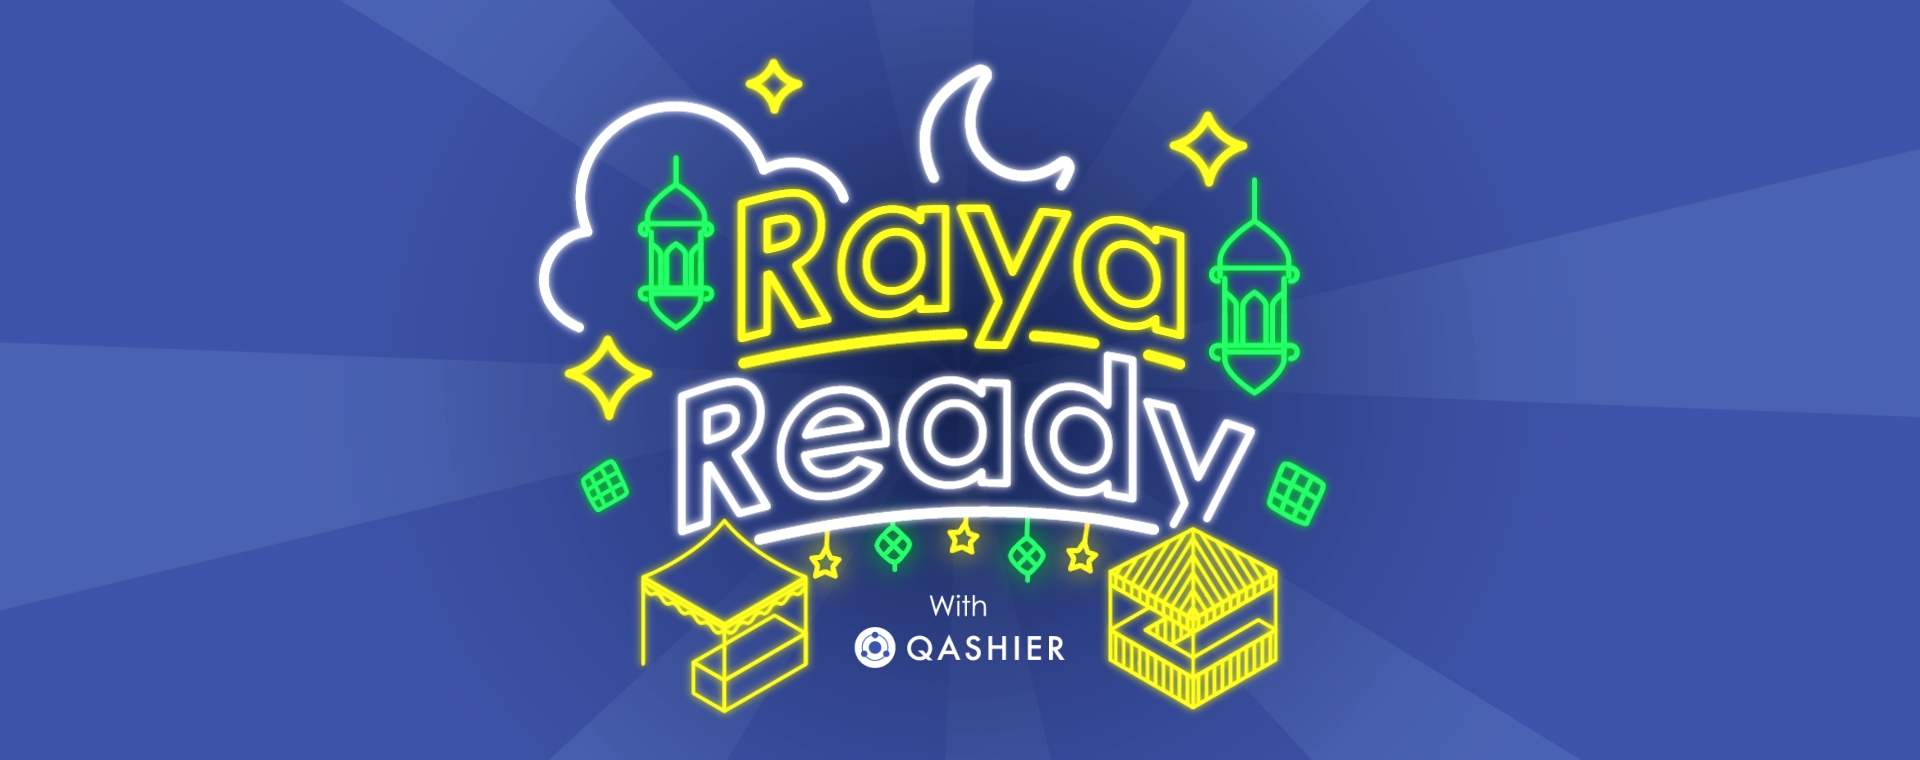 Raya Promo - Qashier Malaysia